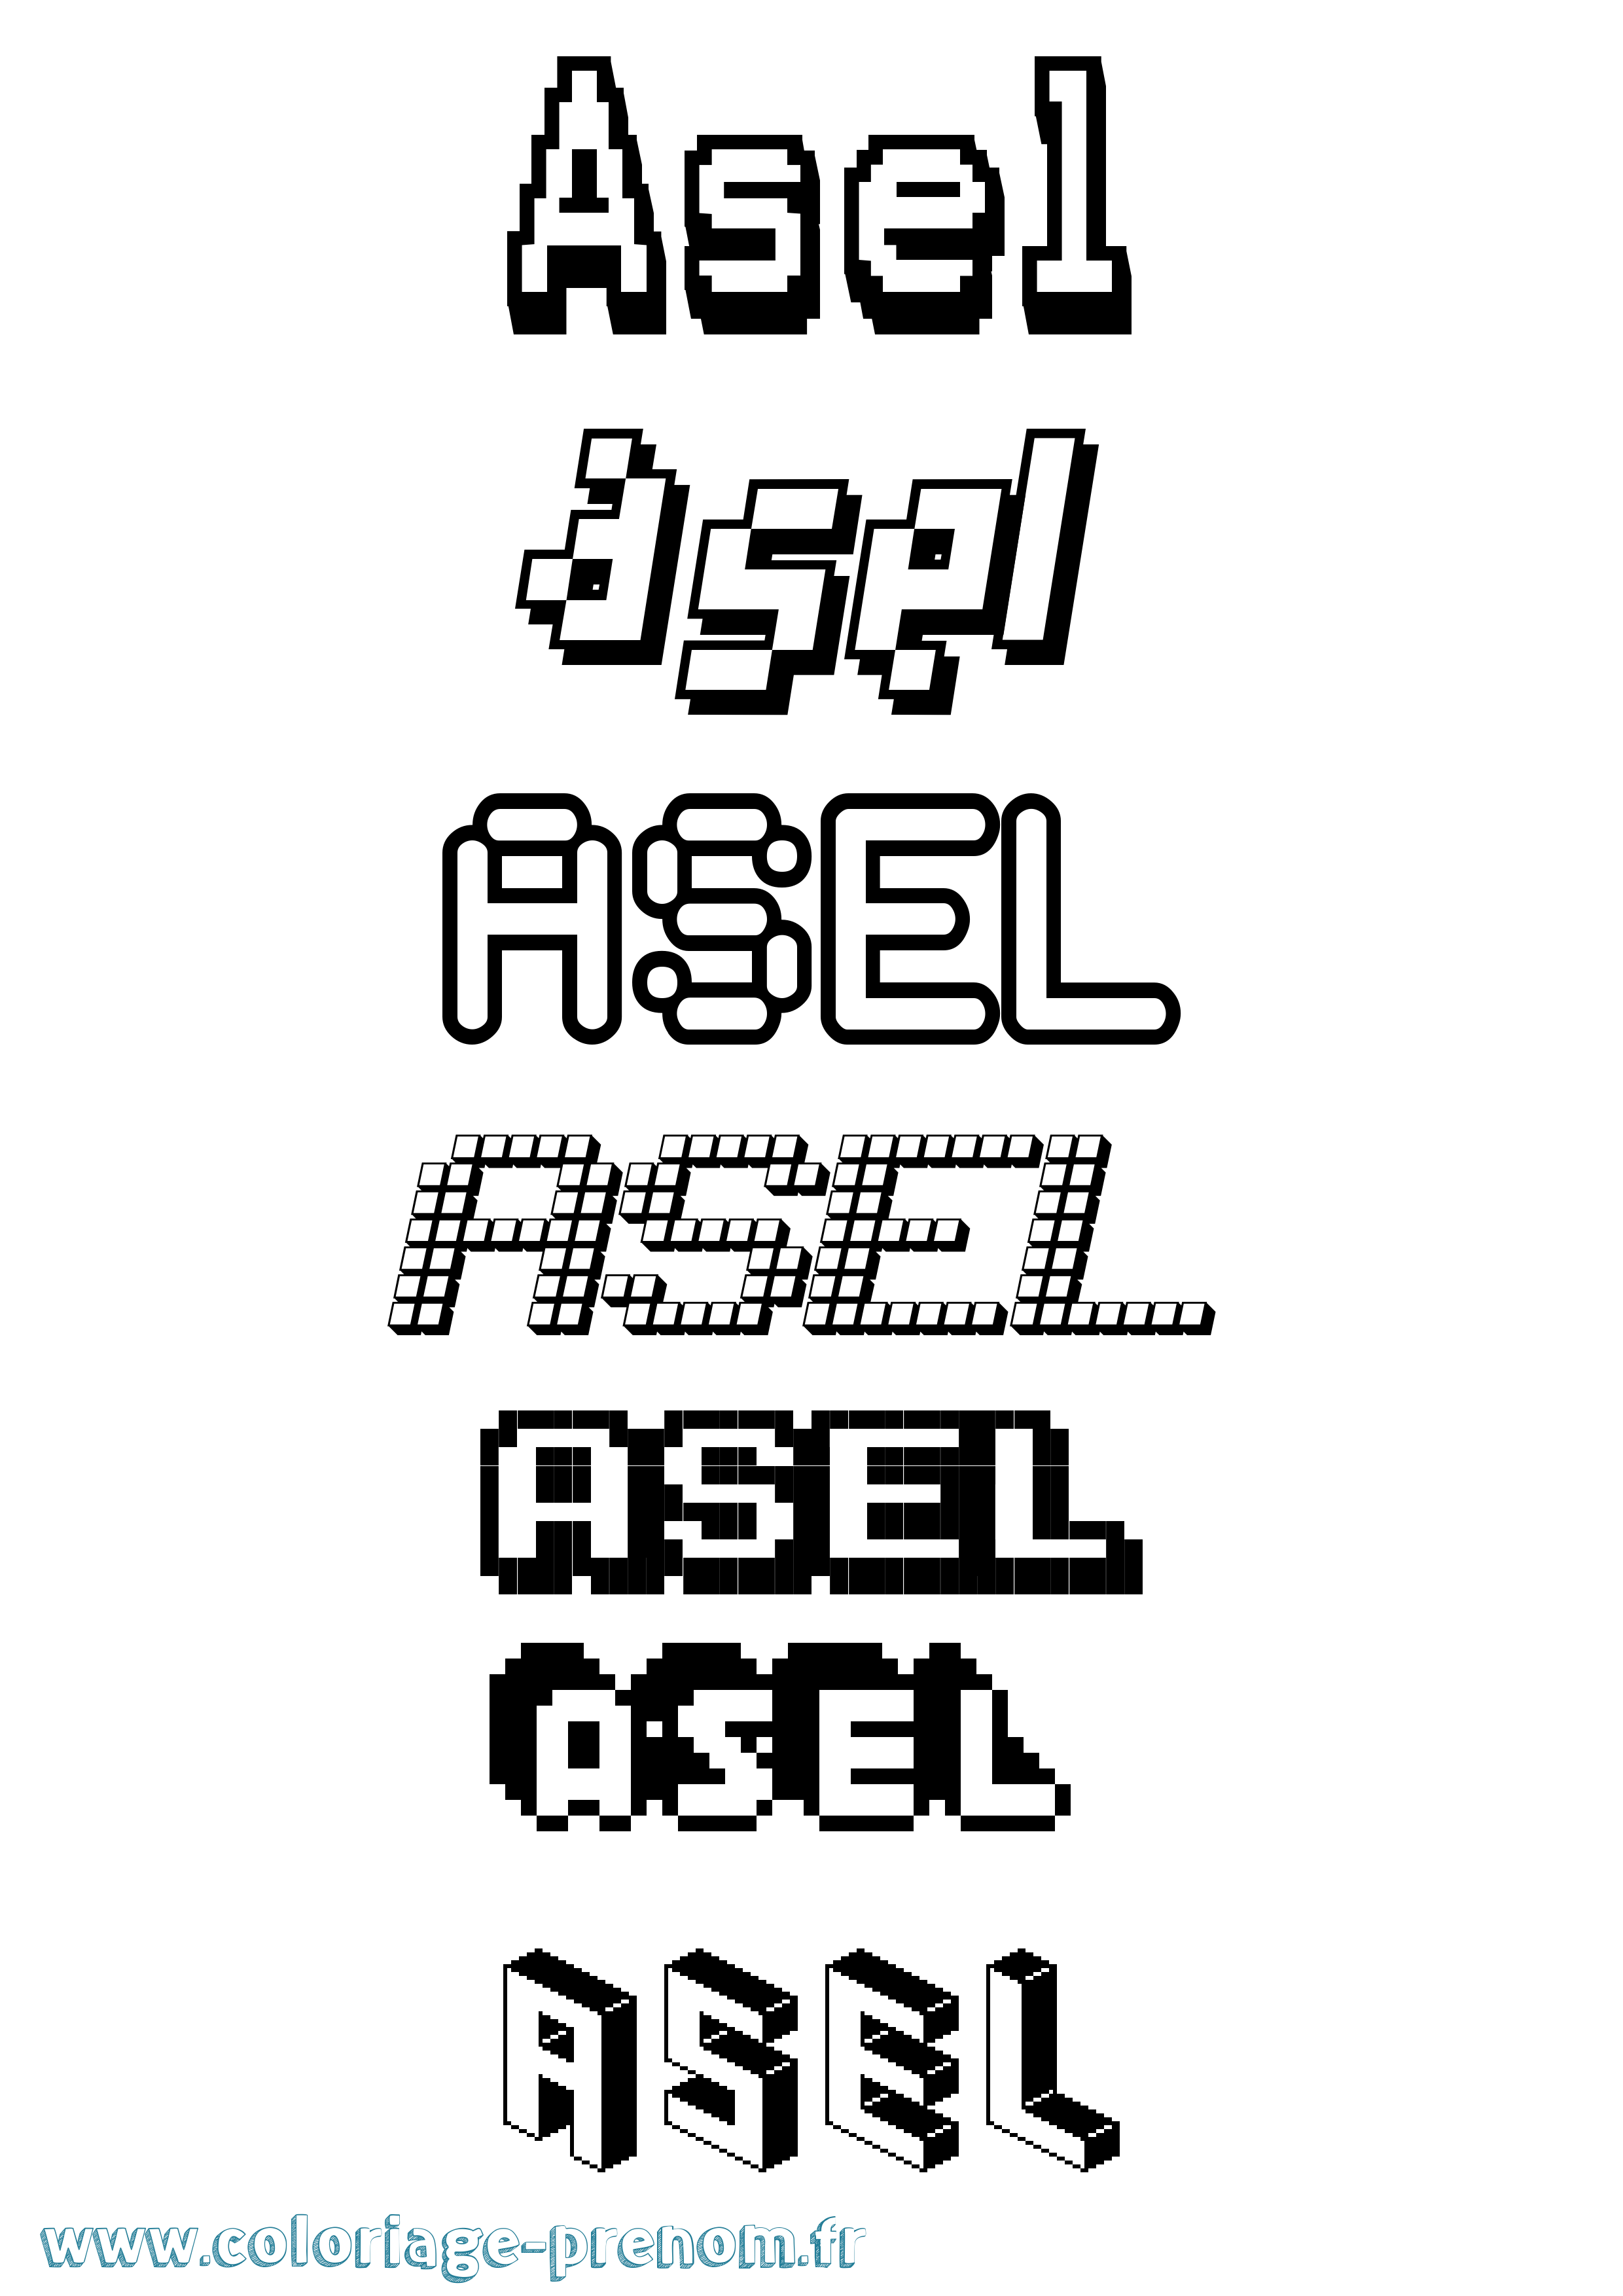 Coloriage prénom Asel Pixel